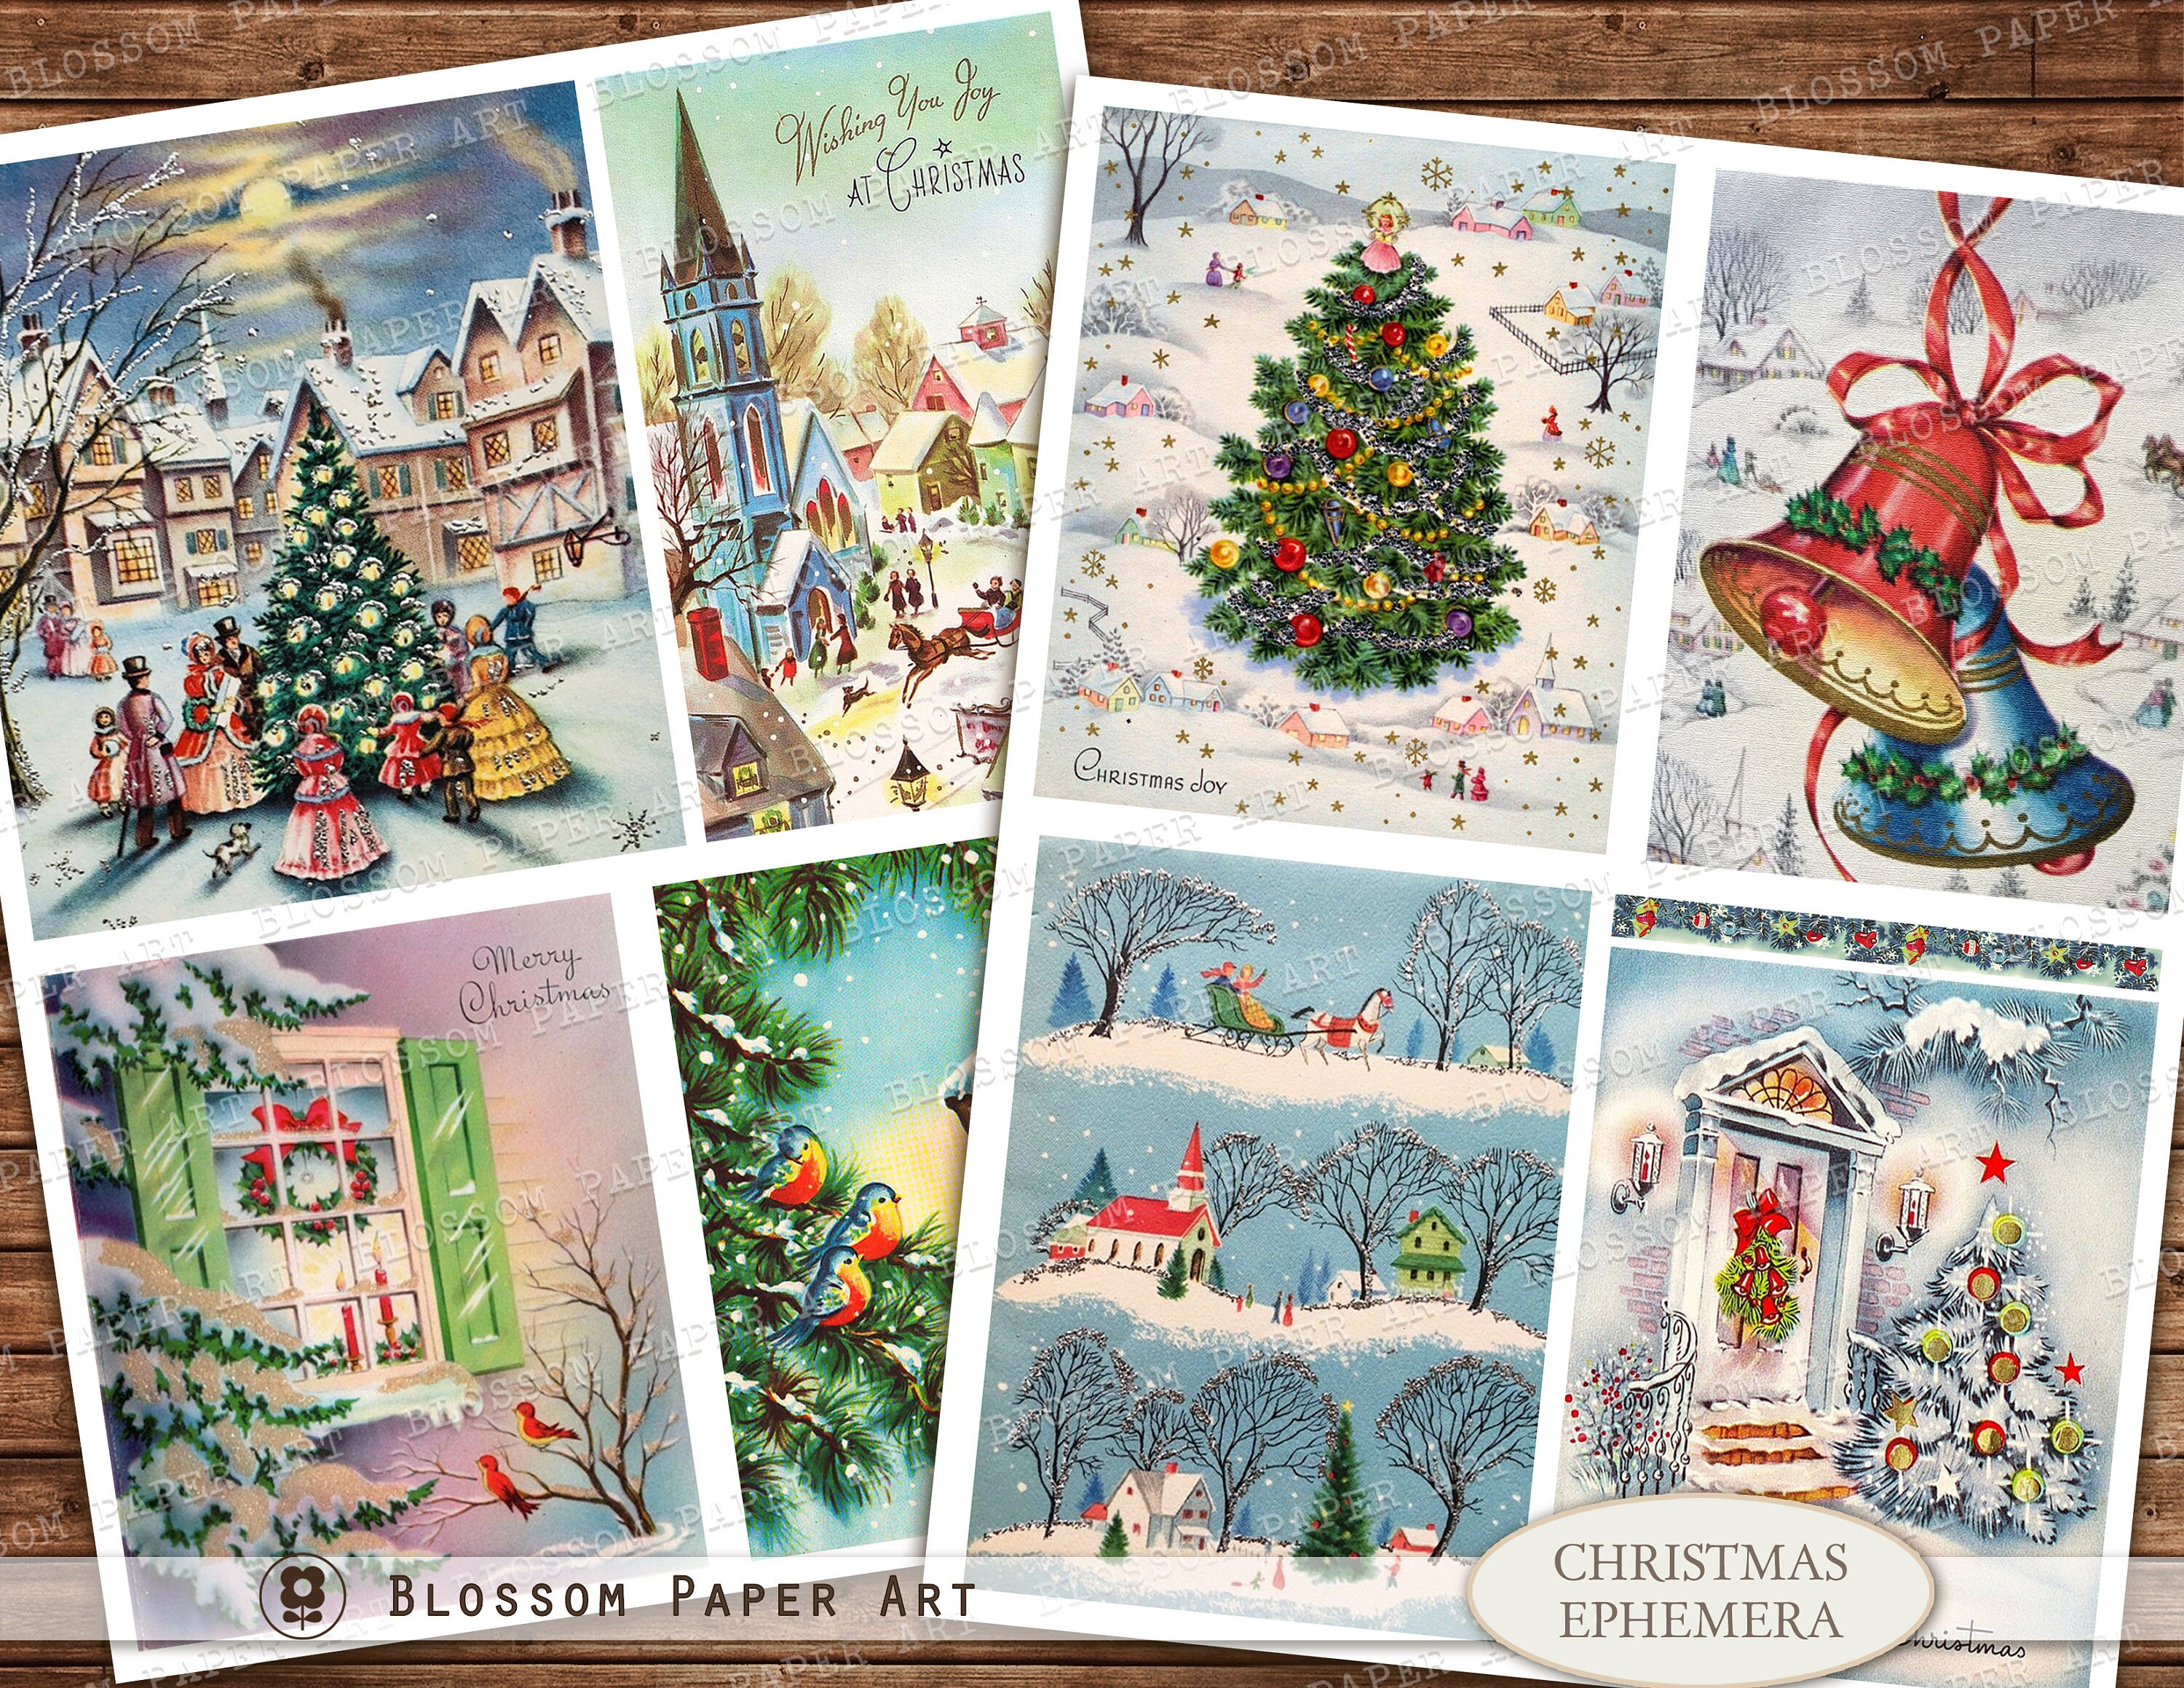 Stream [GET] PDF EBOOK EPUB KINDLE Vintage Christmas Ephemera Book: Over  700 Images On 24 Pages, Cards, Fus by Pelelaurenhoudeunl